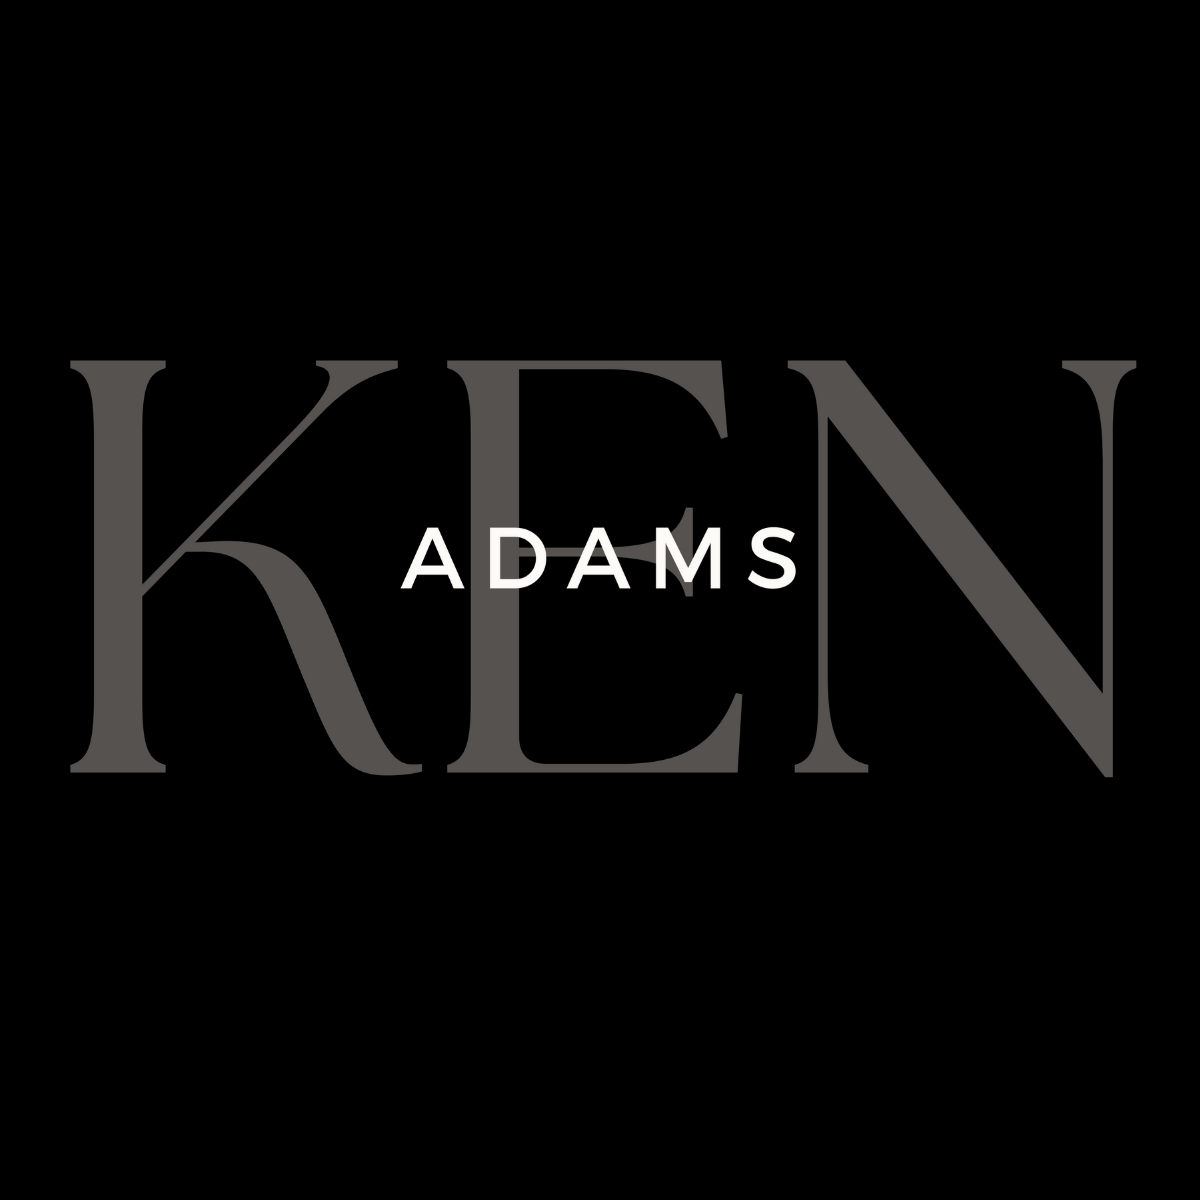 Ken Adams Minimal Official - Ken Adams